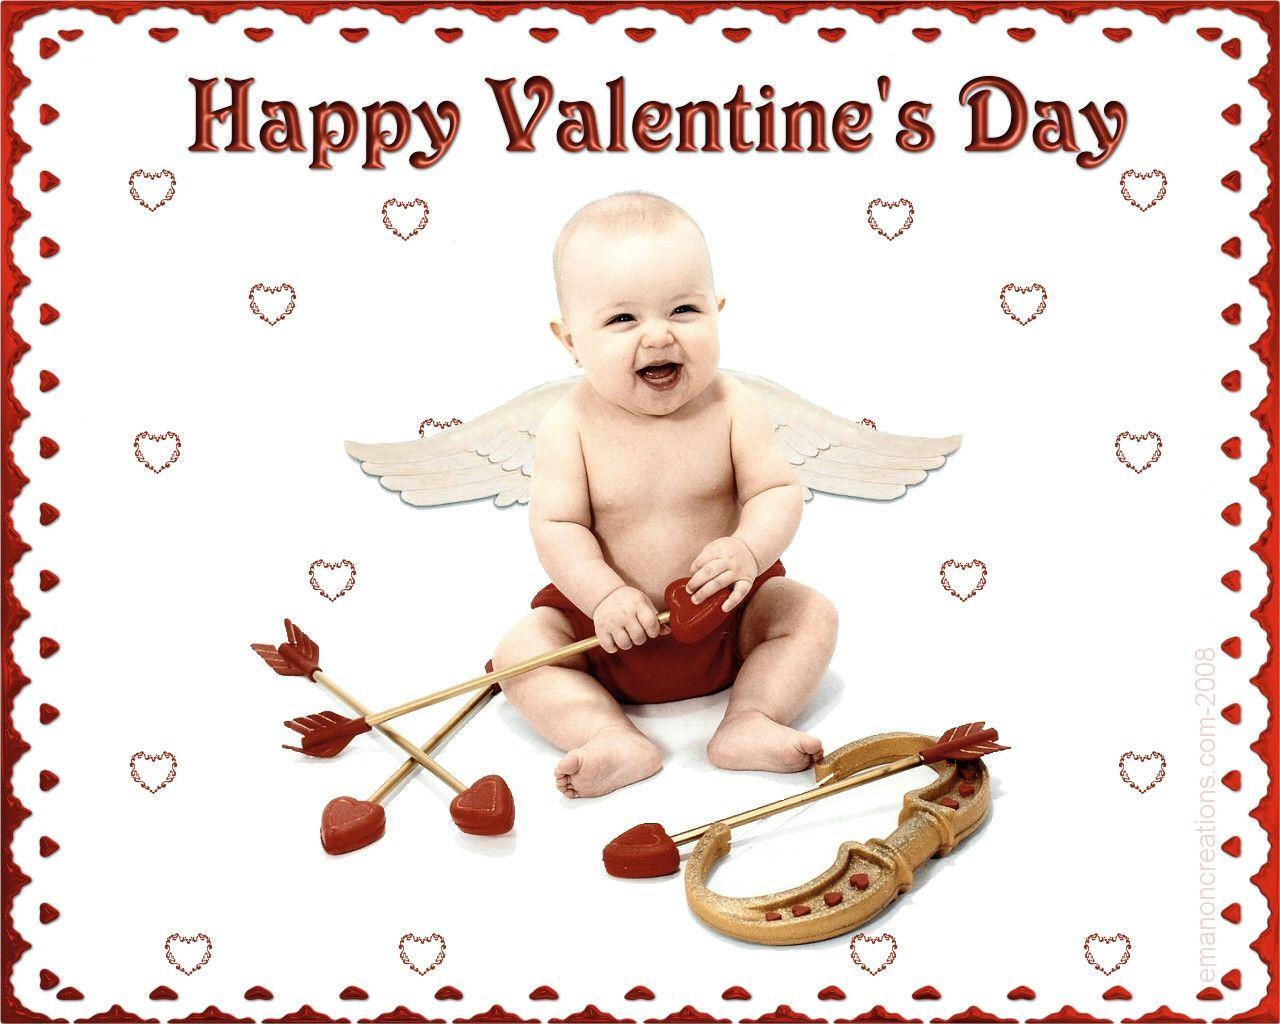 Happy Valentines Day Wallpaper (5) Online. Amazing